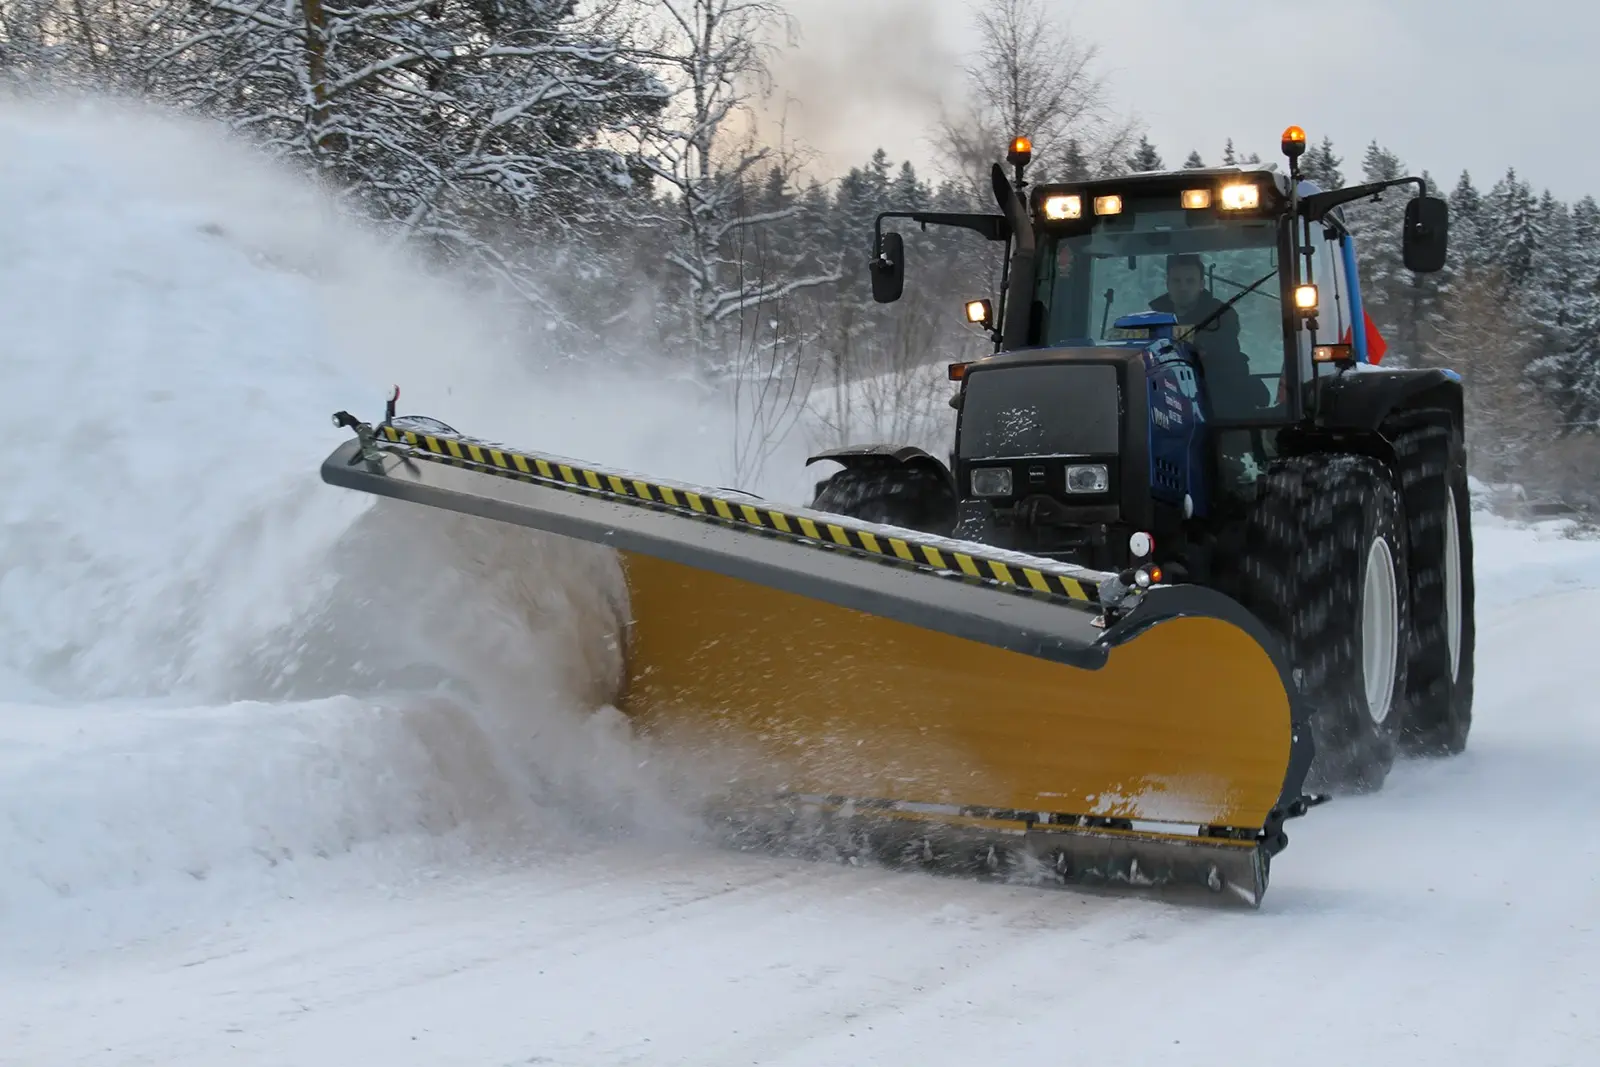 Stark Diagonal Plow in action plowing snow